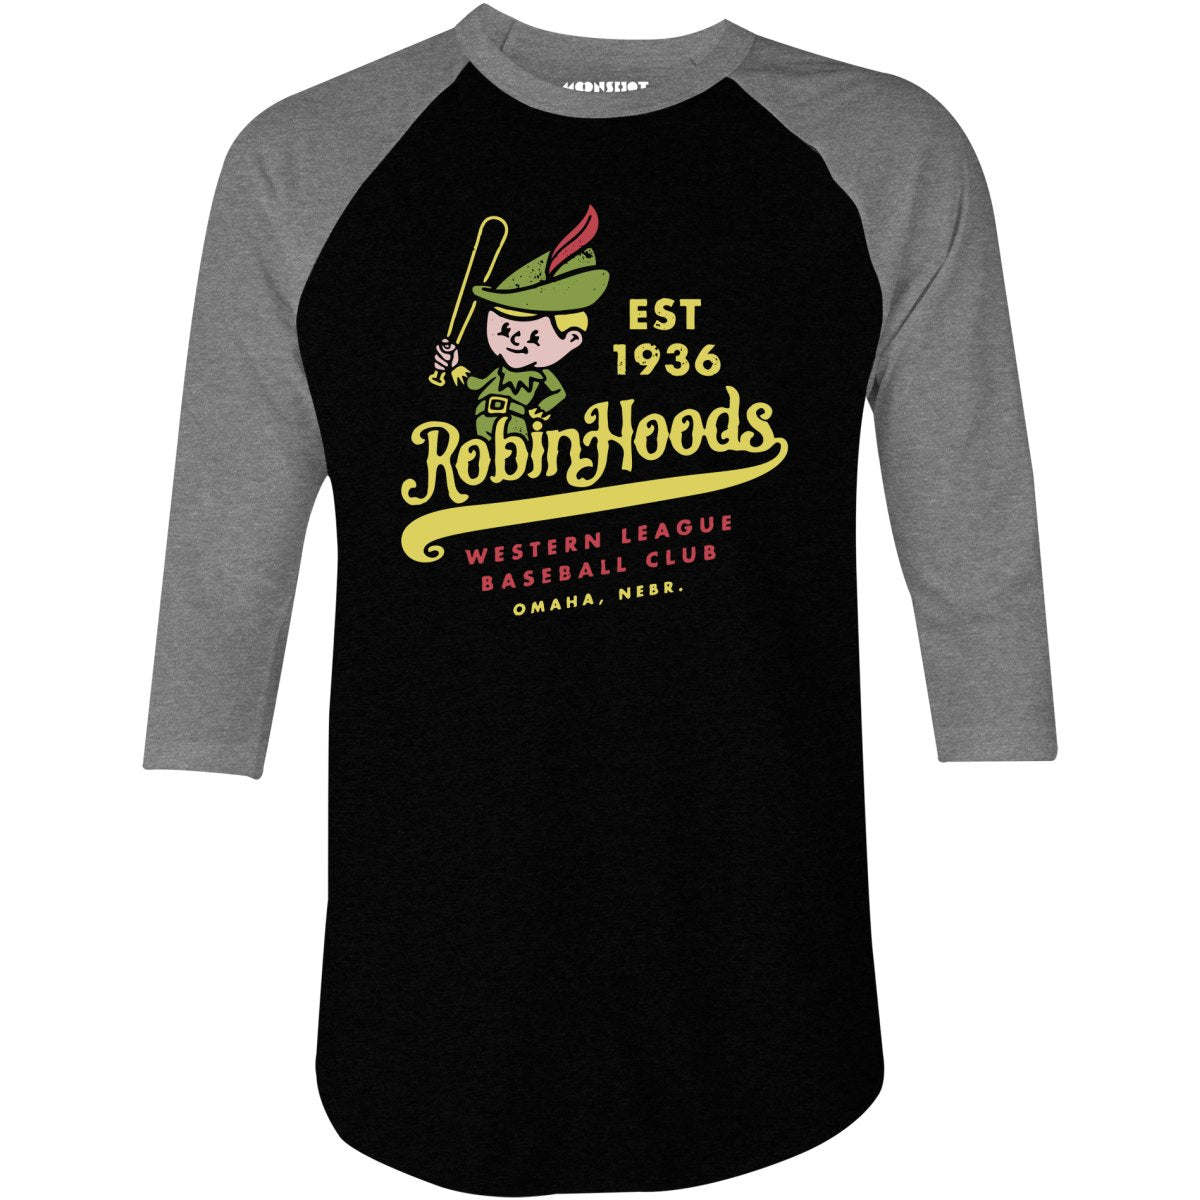 Omaha Robin Hoods - Nebraska - Vintage Defunct Baseball Teams - 3/4 Sleeve Raglan T-Shirt